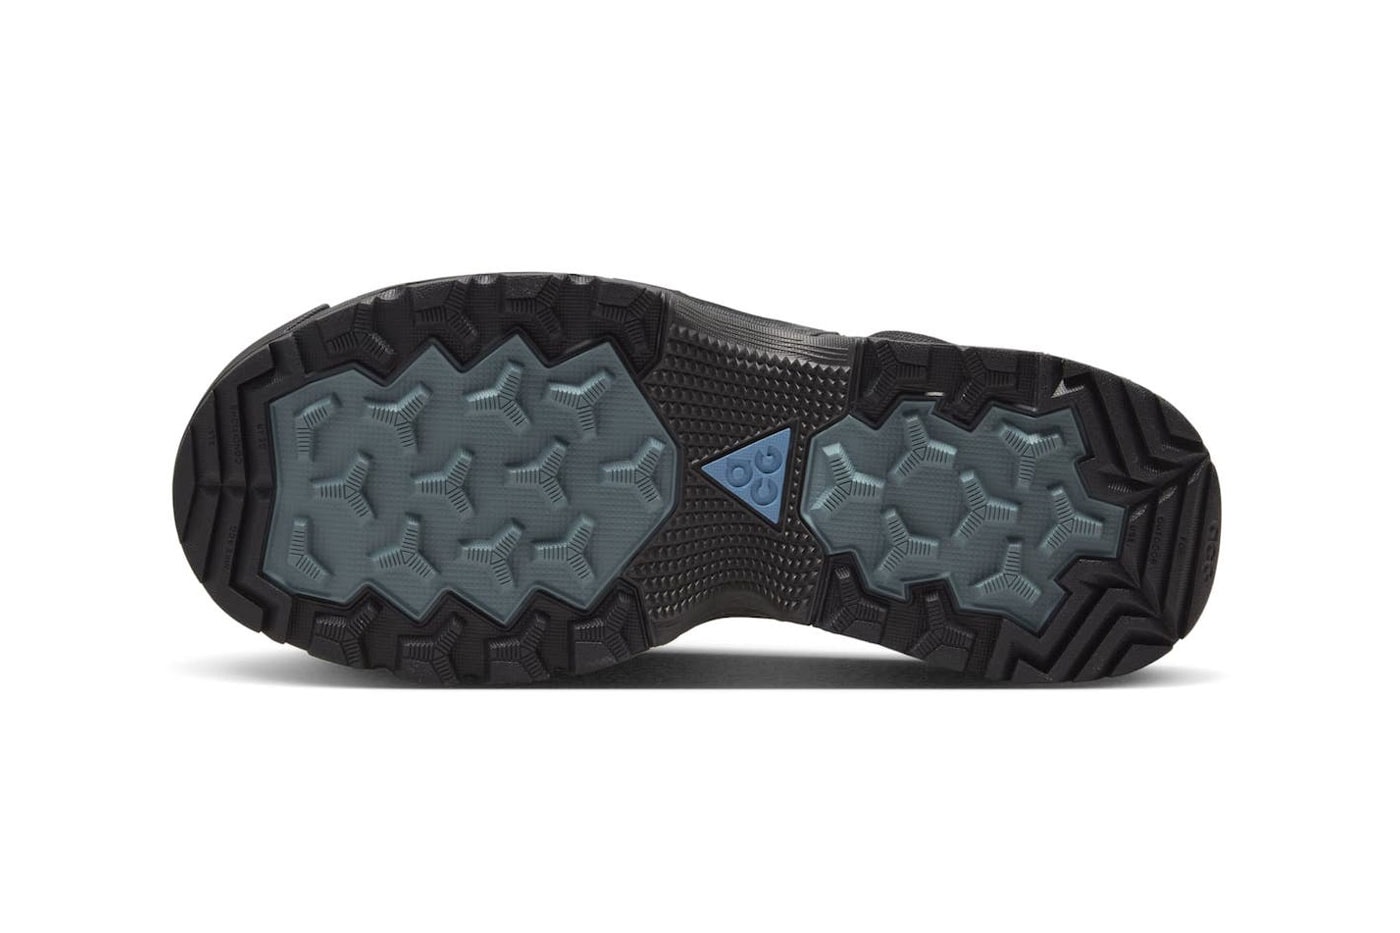 Nike ACG Zoom Gaiadome Gore Tex GTX winter olympics boots release date info price white black DD2858 100 DD2858 001 DD2858 200 neon blue red